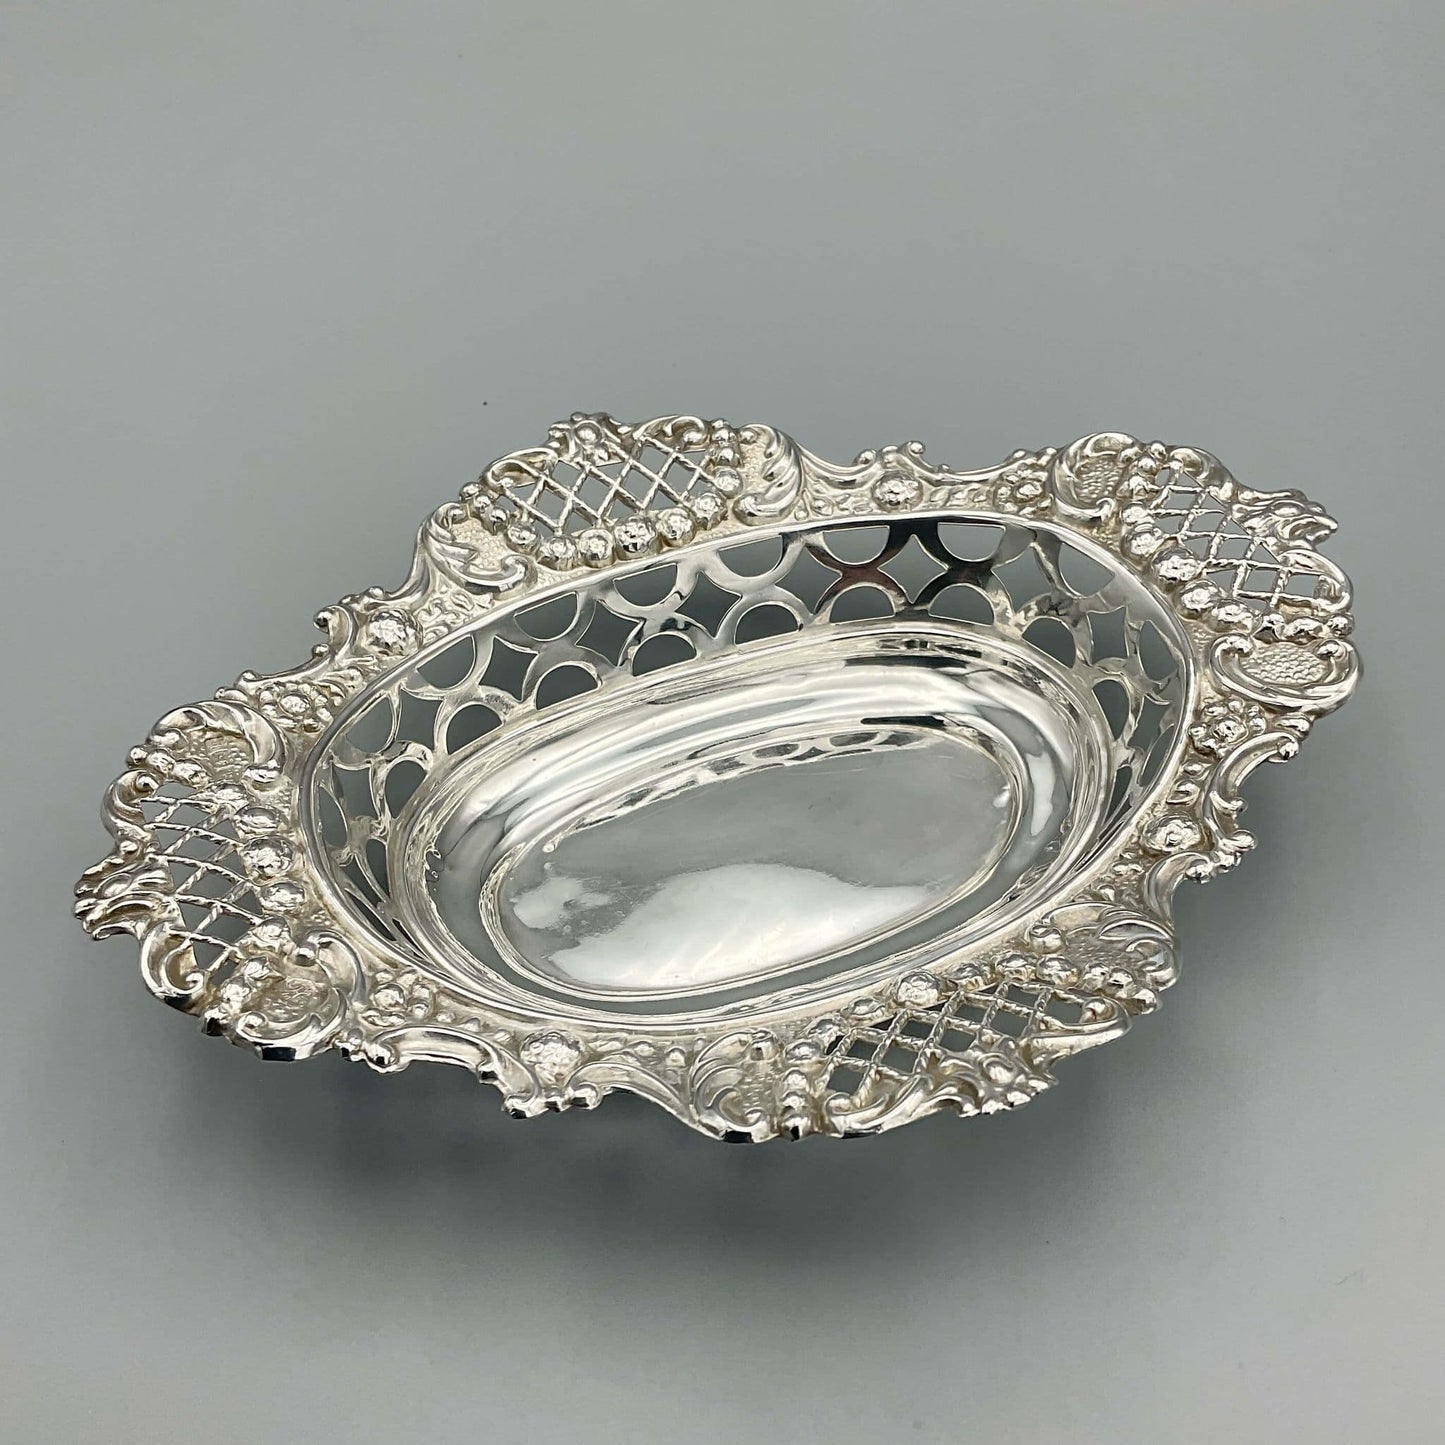 Ornate silver pierced bowl on grey background 